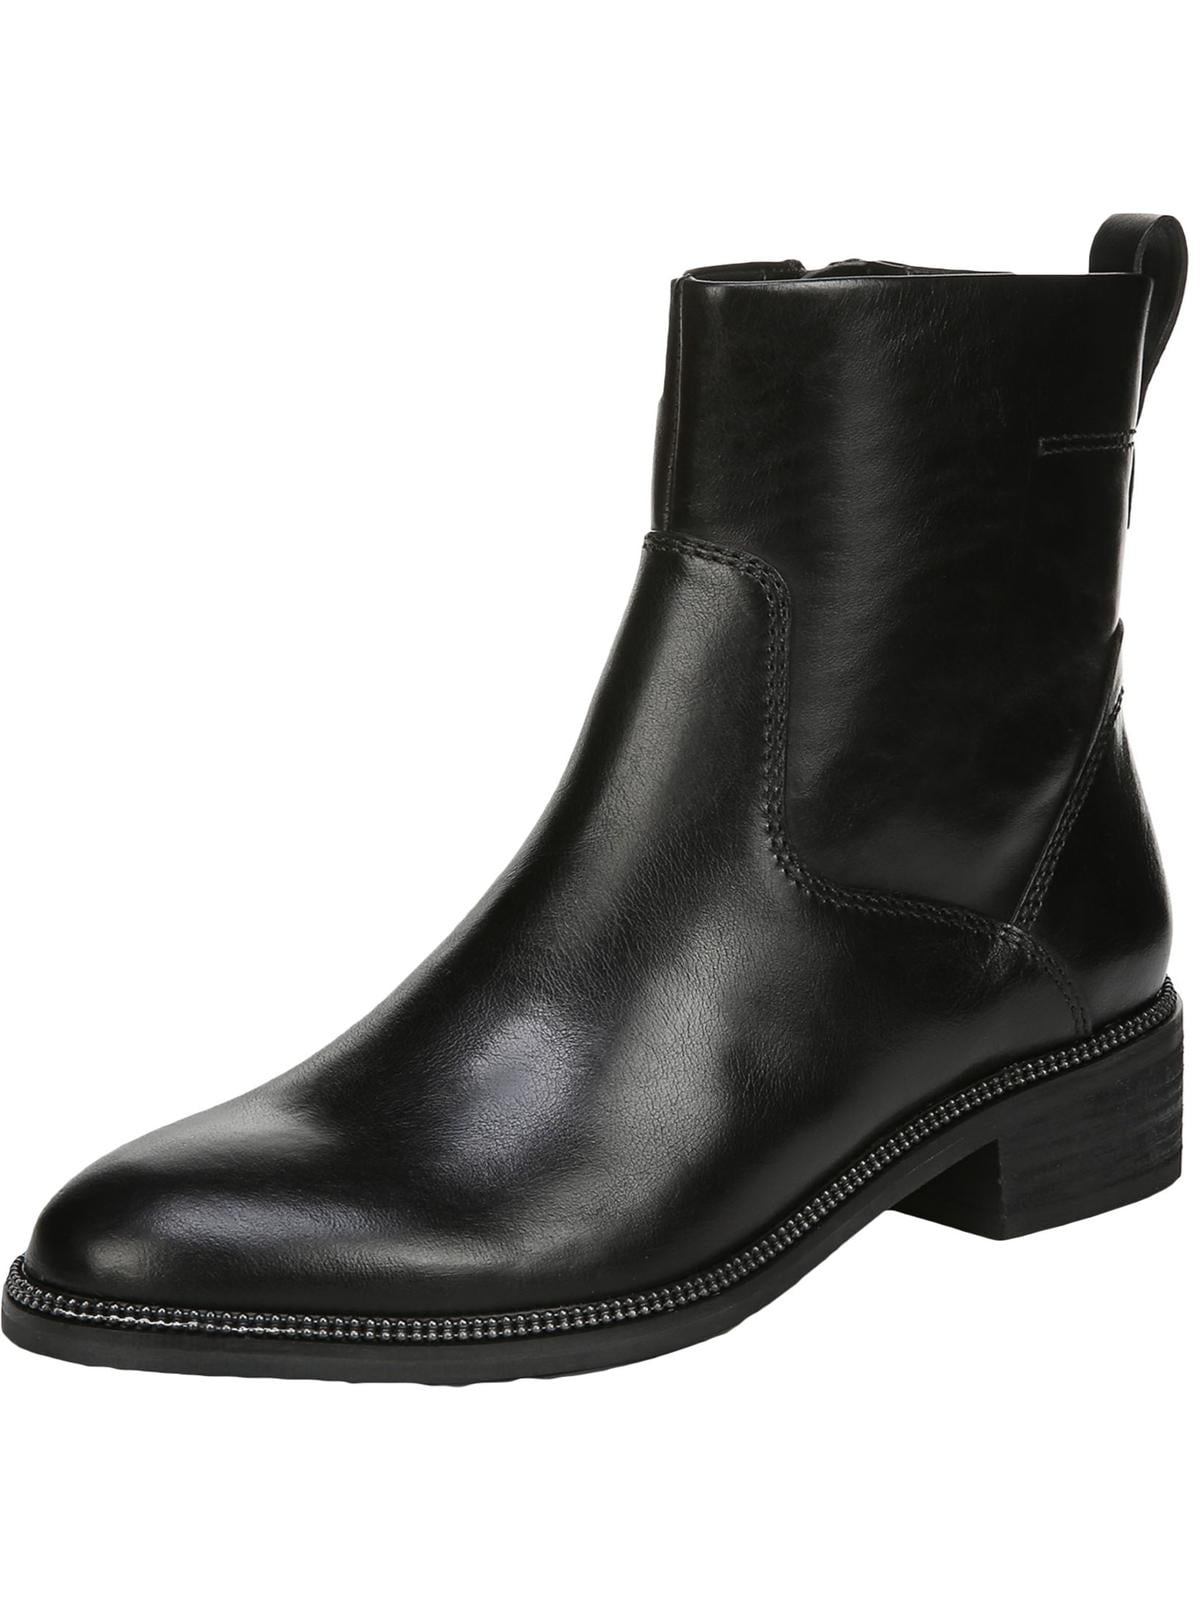 Injustice Nevertheless Hospitality Franco Sarto Womens Brindle Leather Ankle Dress Boots Black 7 Medium (B,M)  - Walmart.com